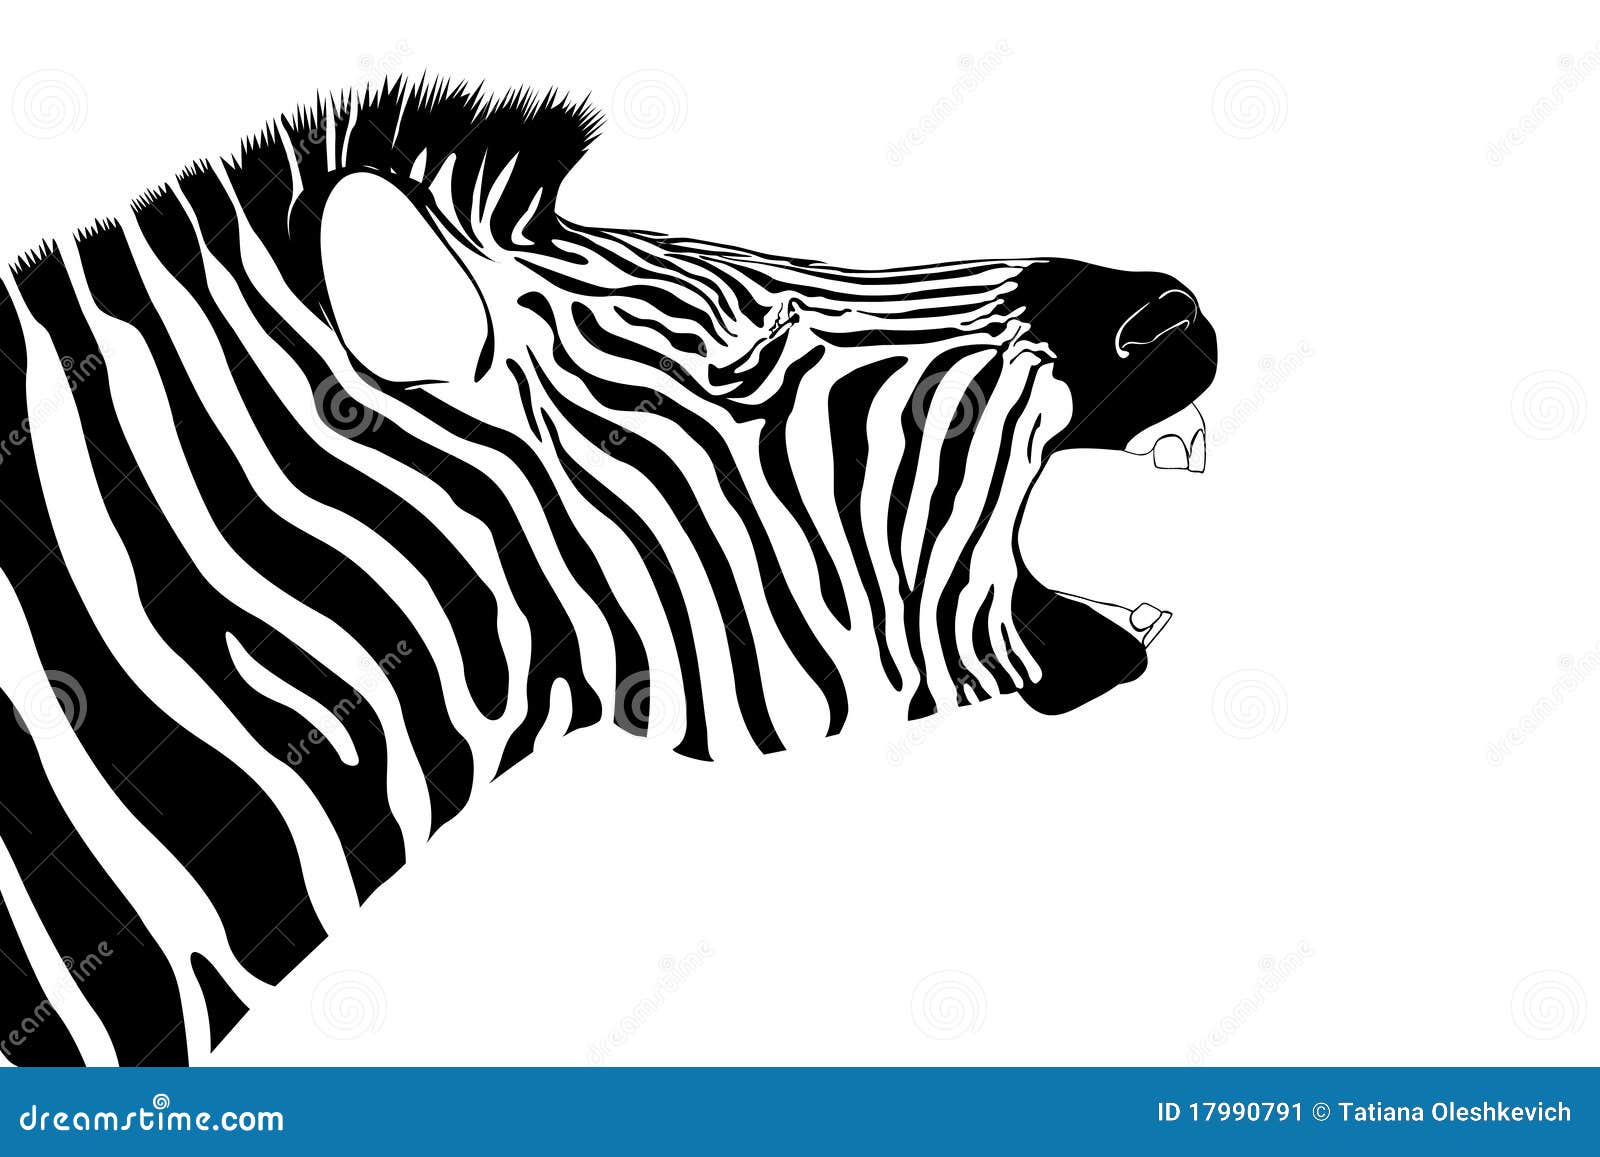 shouting zebra isolate